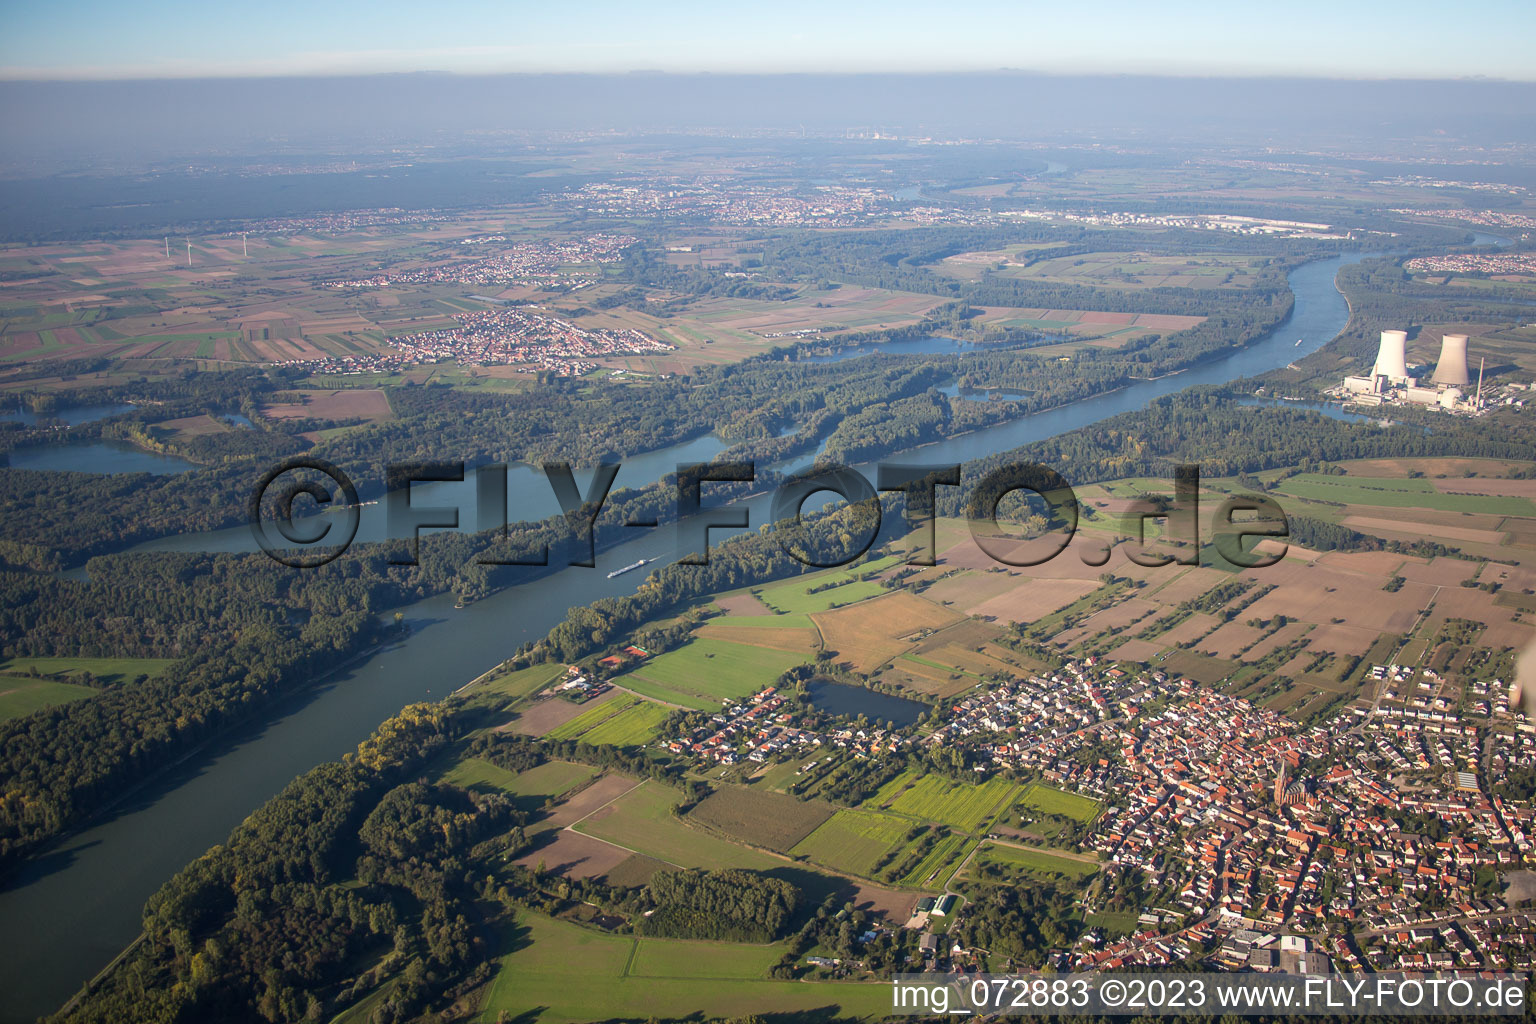 Aerial view of District Rheinsheim in Philippsburg in the state Baden-Wuerttemberg, Germany